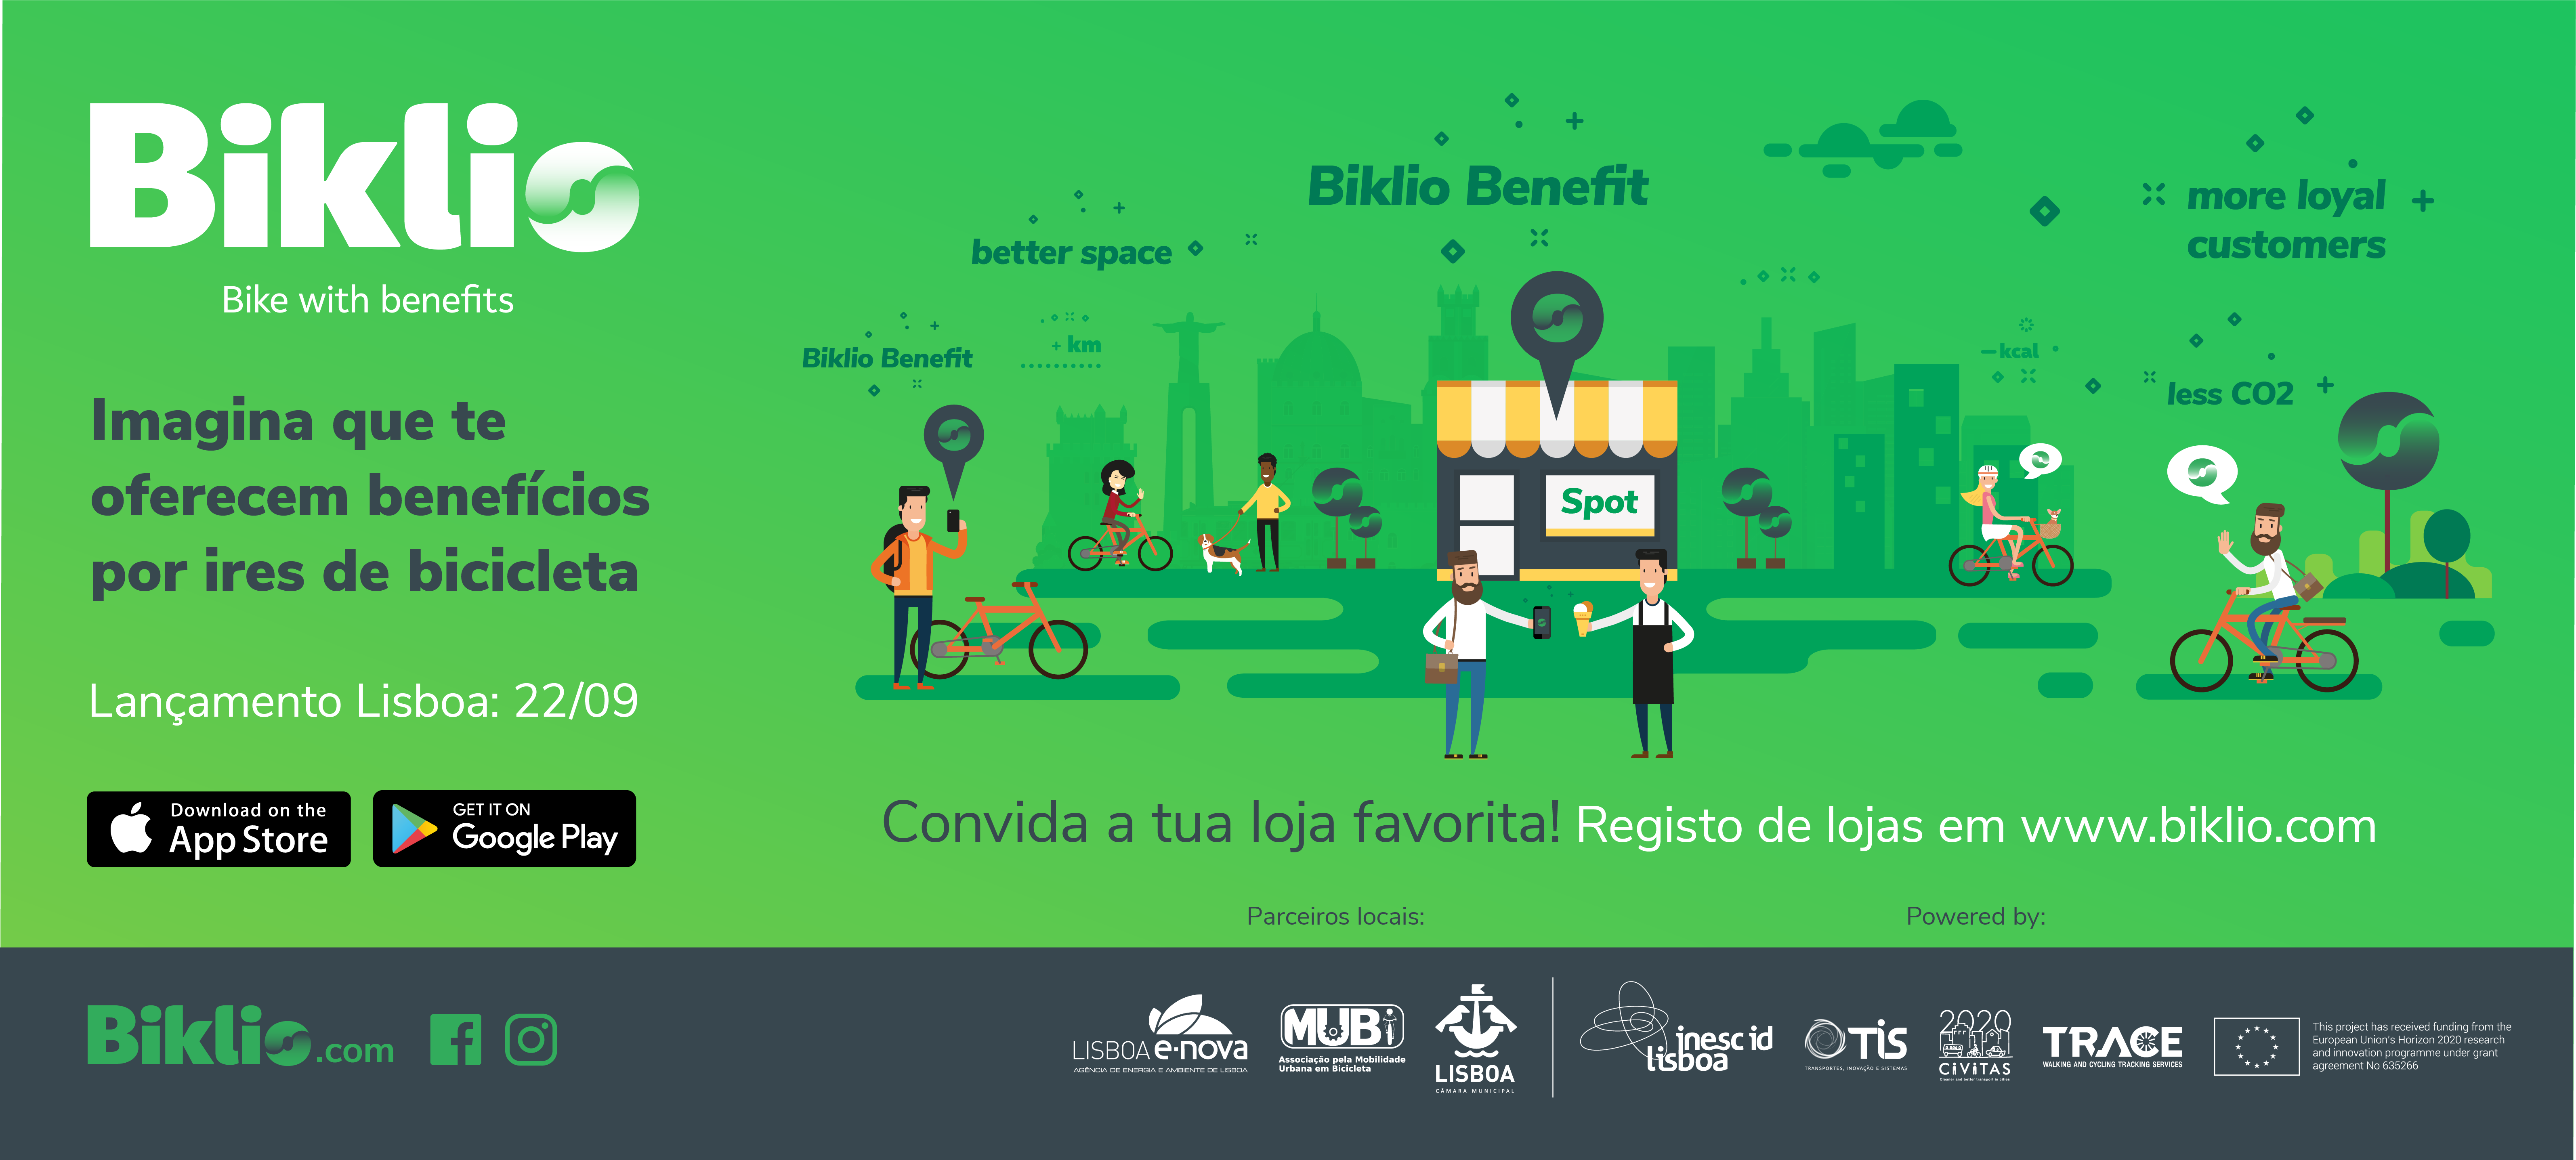 Biklio Bike To Shop Campaign Lisboa 1